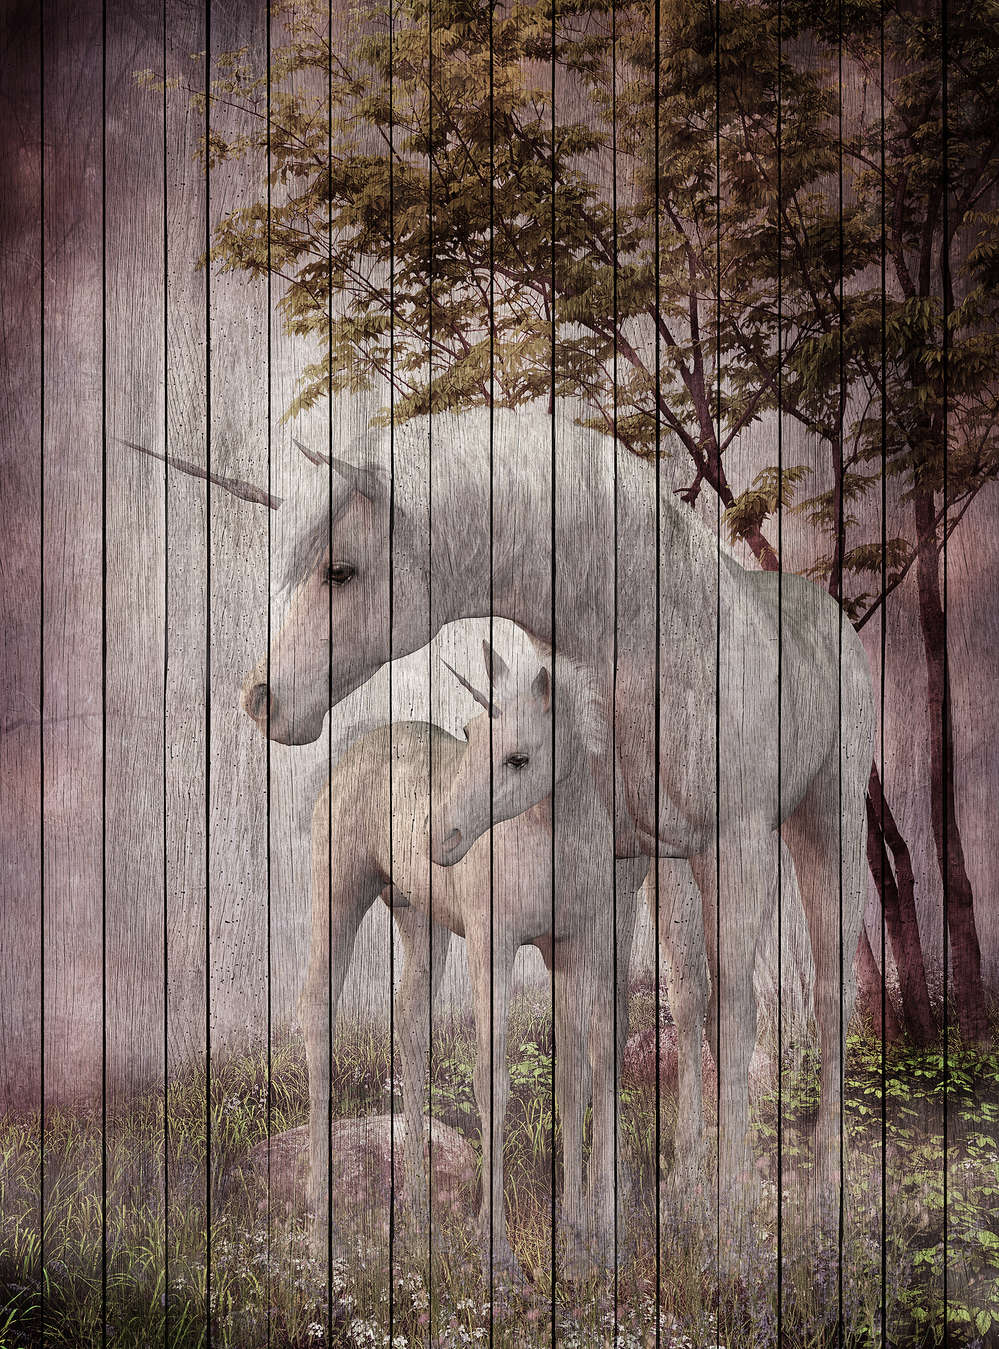             Fantasy 4 - Unicorn & Wood Optic Wallpaper - Beige, Pink | Premium Smooth Non-woven
        